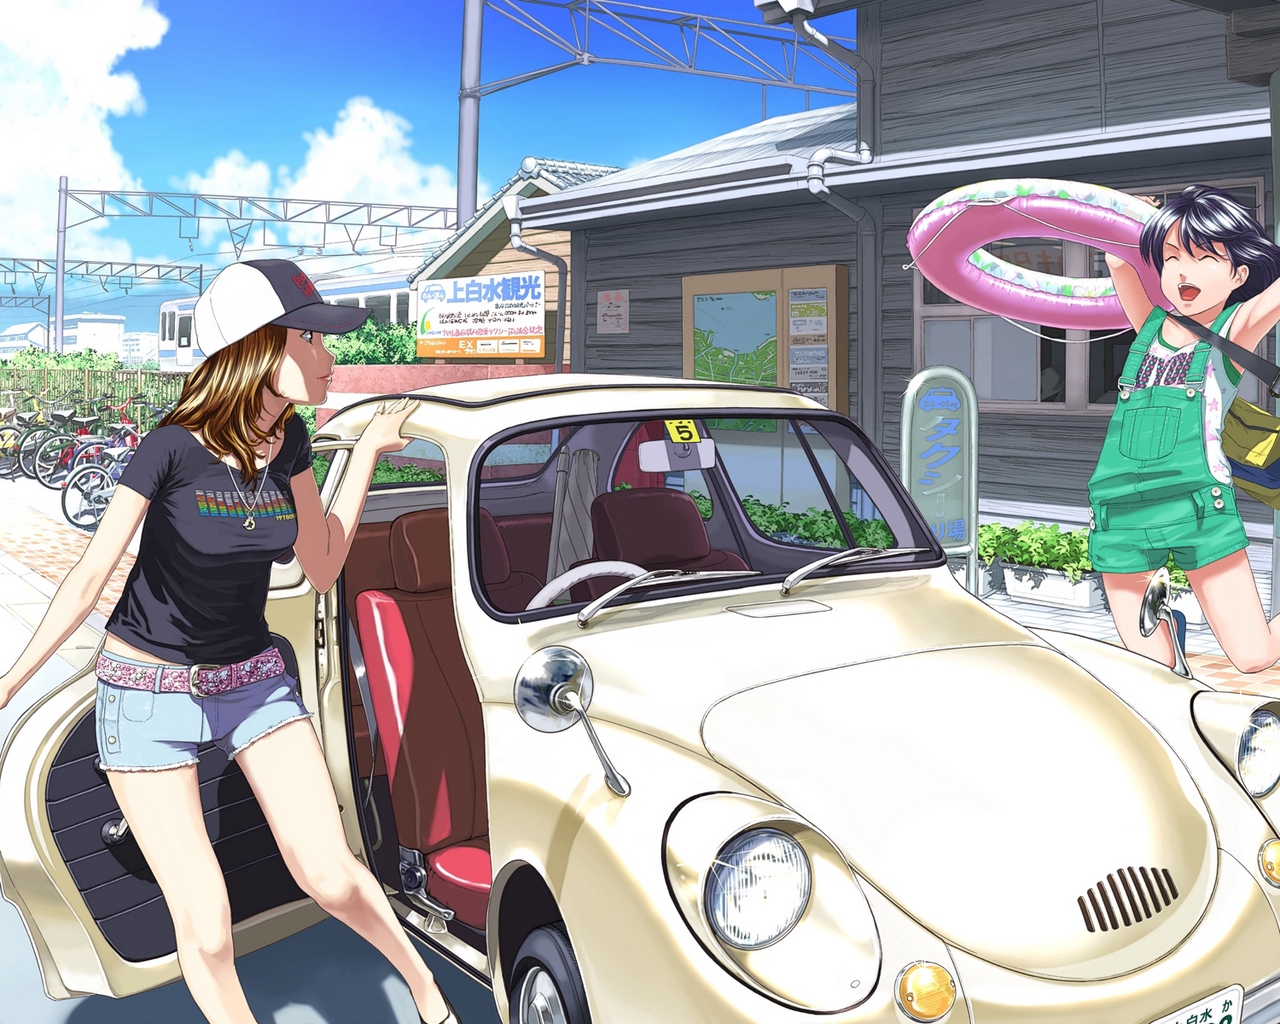 Wallpaper Anime, Girls, Fun, Car, Summer, Travel, Swimming - Anime Girls In A Car - HD Wallpaper 